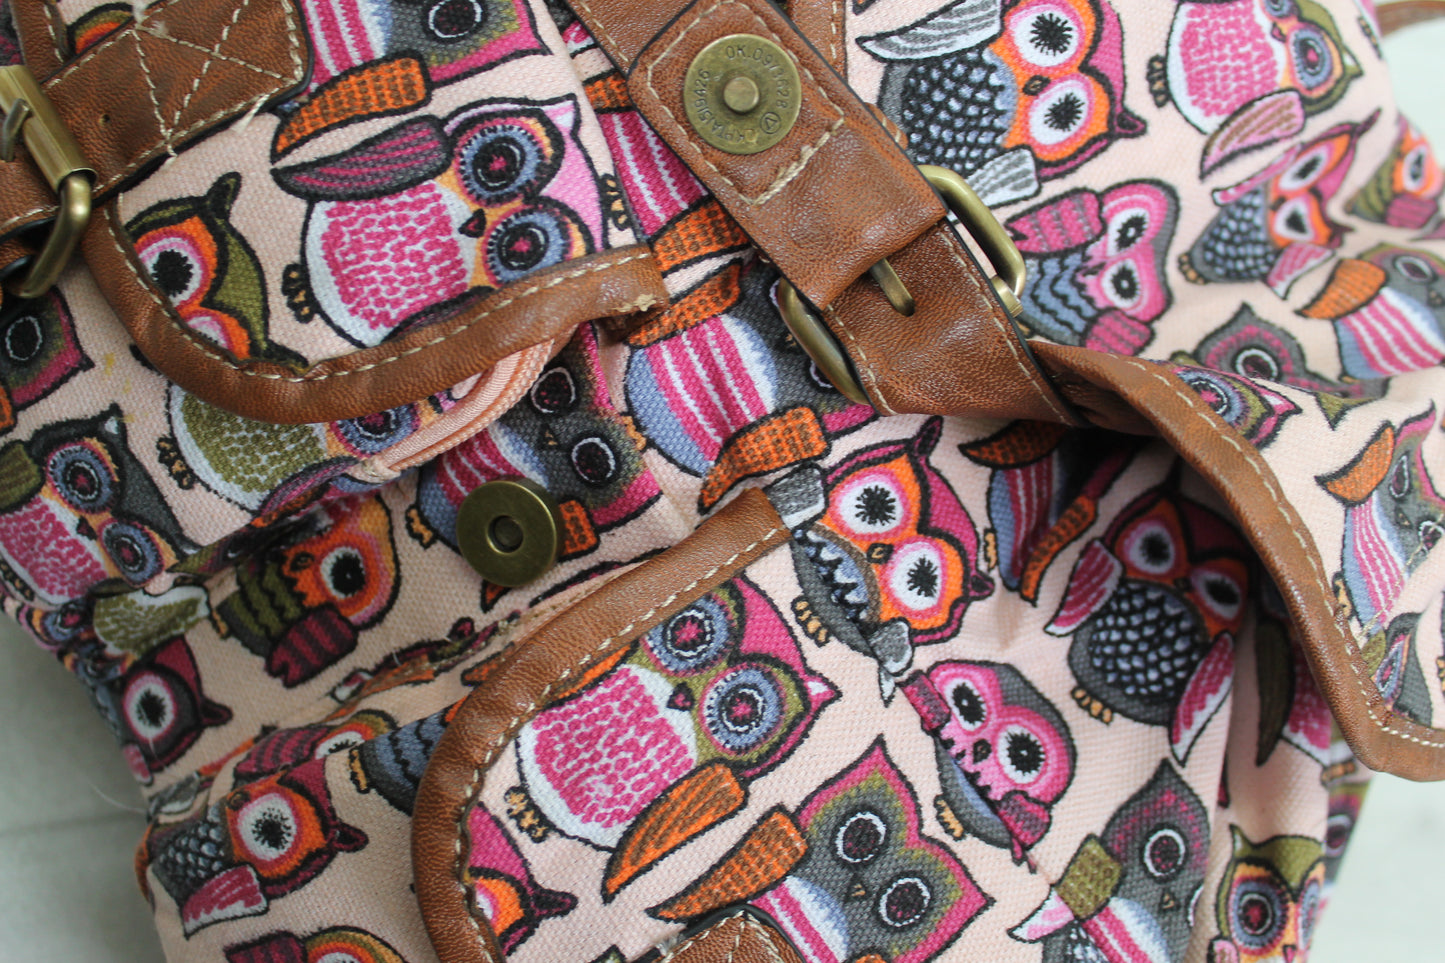 Anna Vintage Owl Print Canvas Backpack Pink